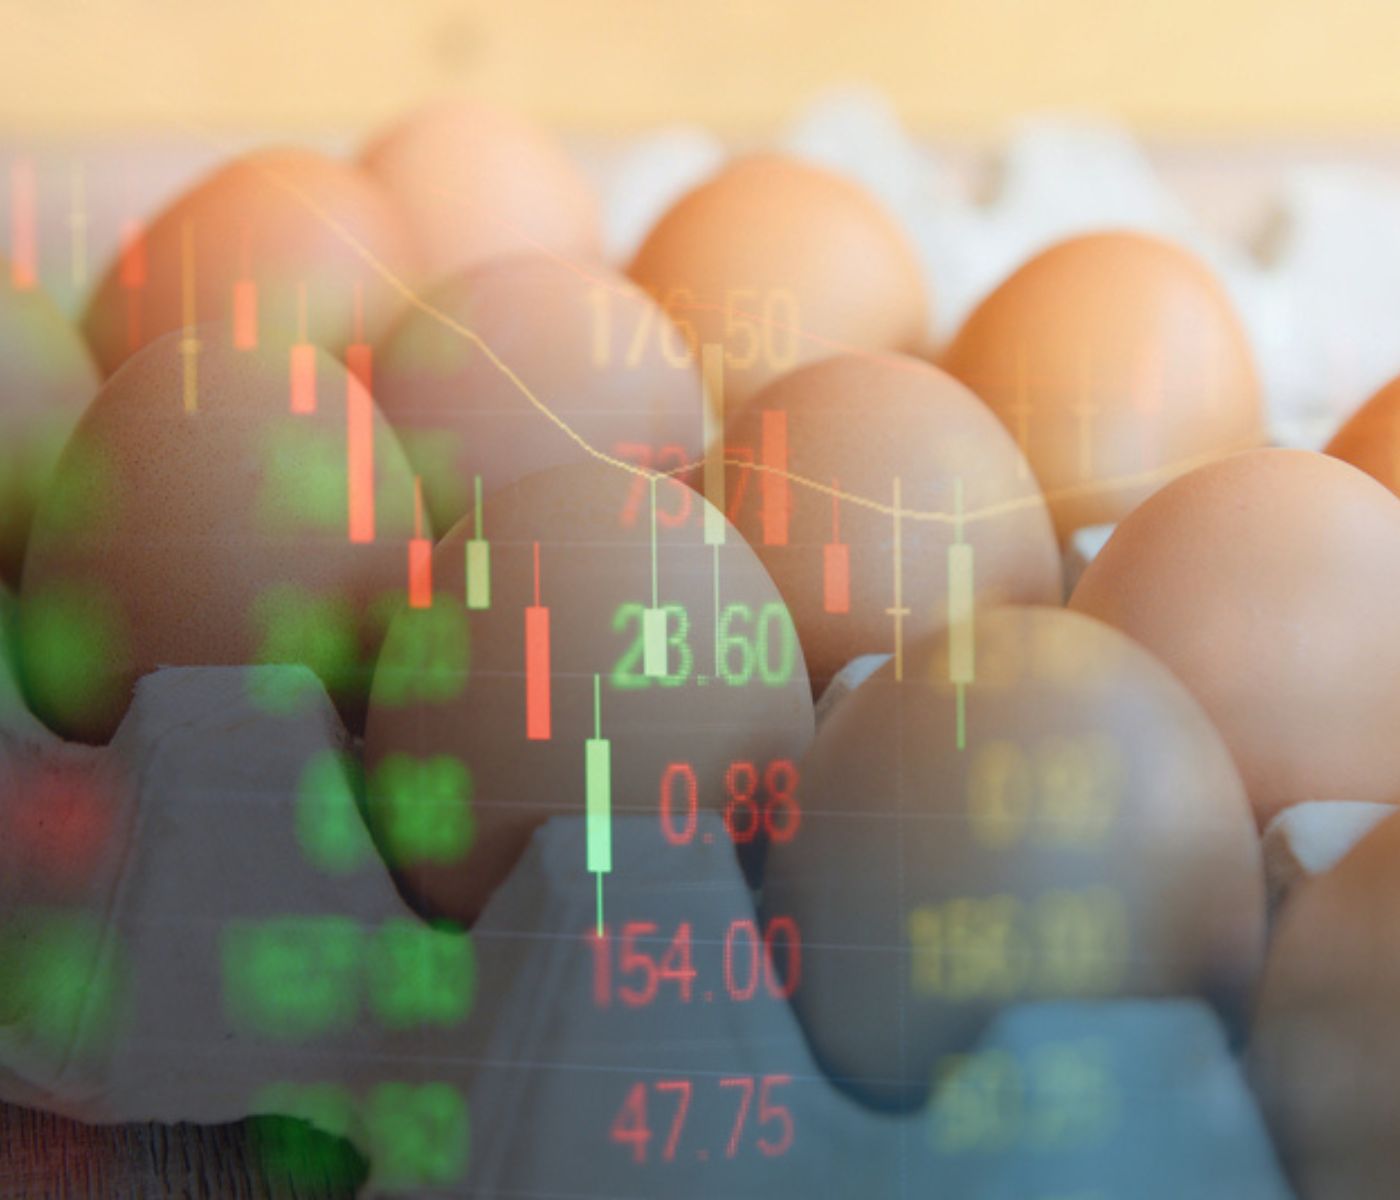 U.S. egg prices fell in February